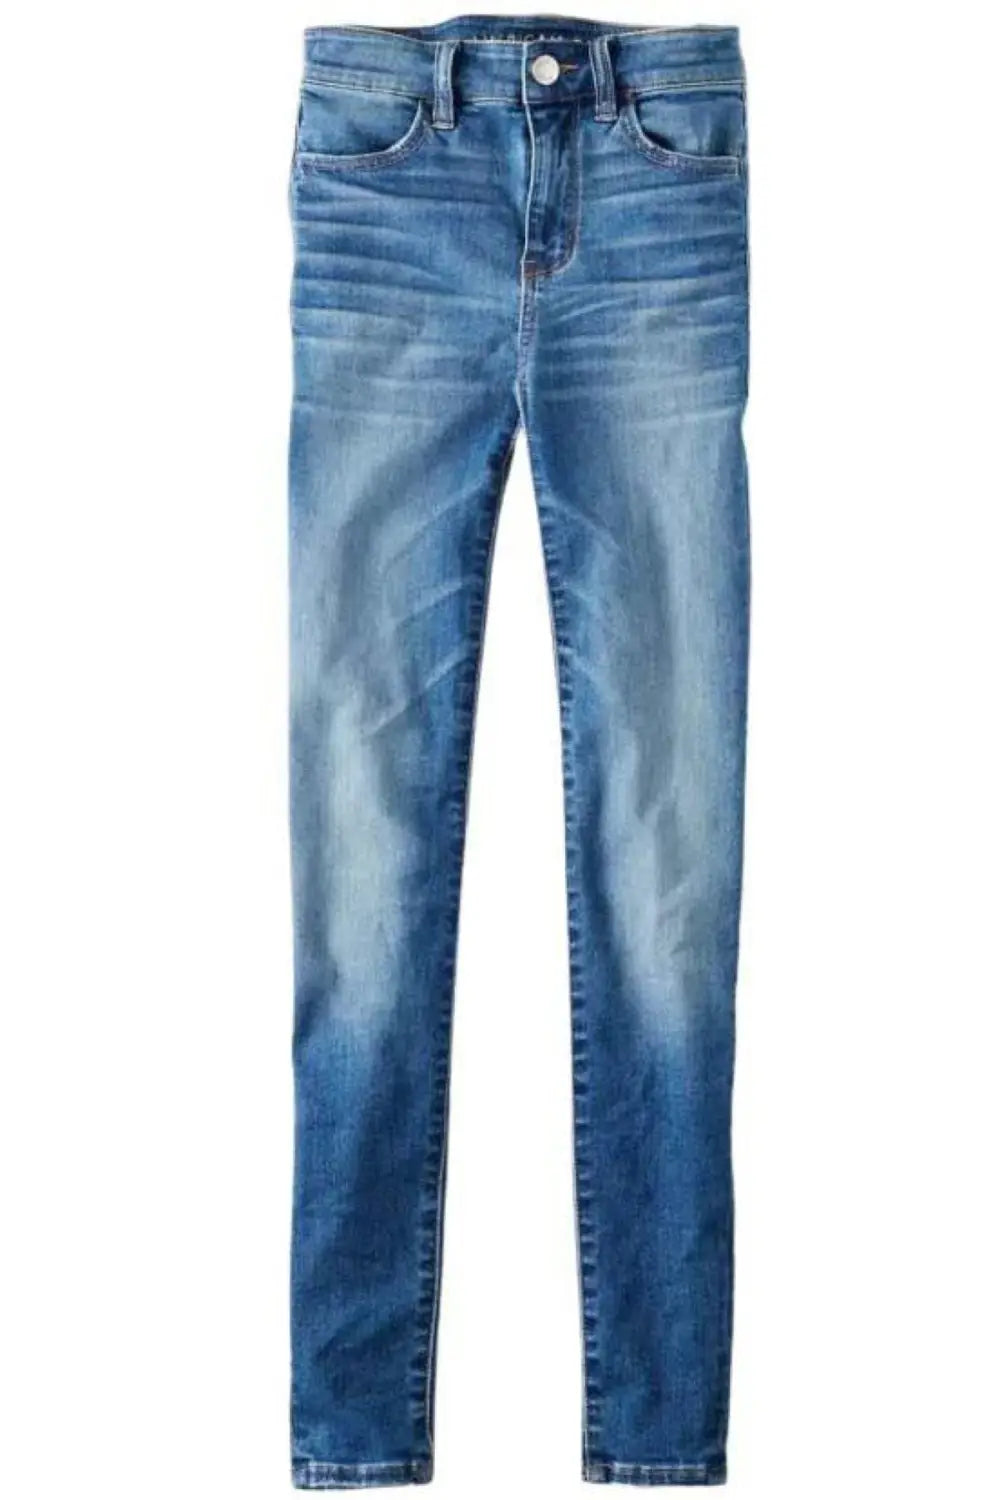 American Eagle Skinny Jeans Women's Size 00 Super Stretch Dark Wash 